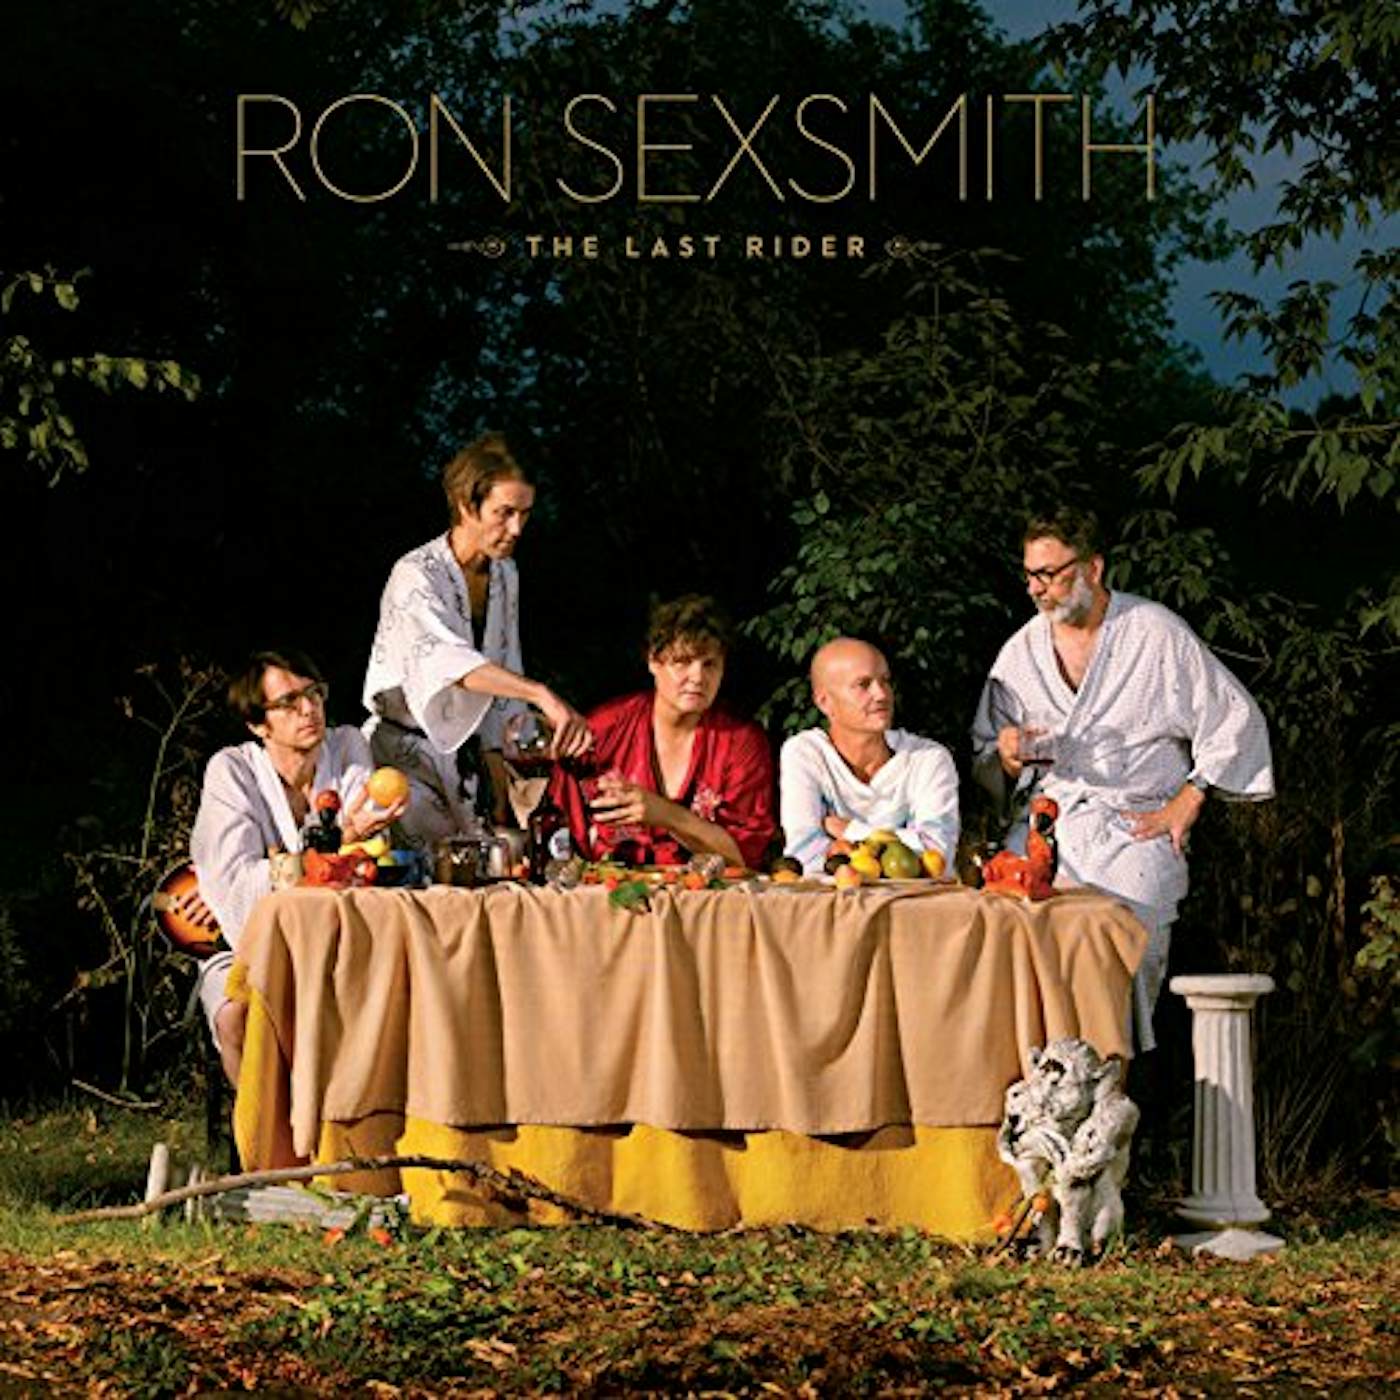 Ron Sexsmith LAST RIDER CD